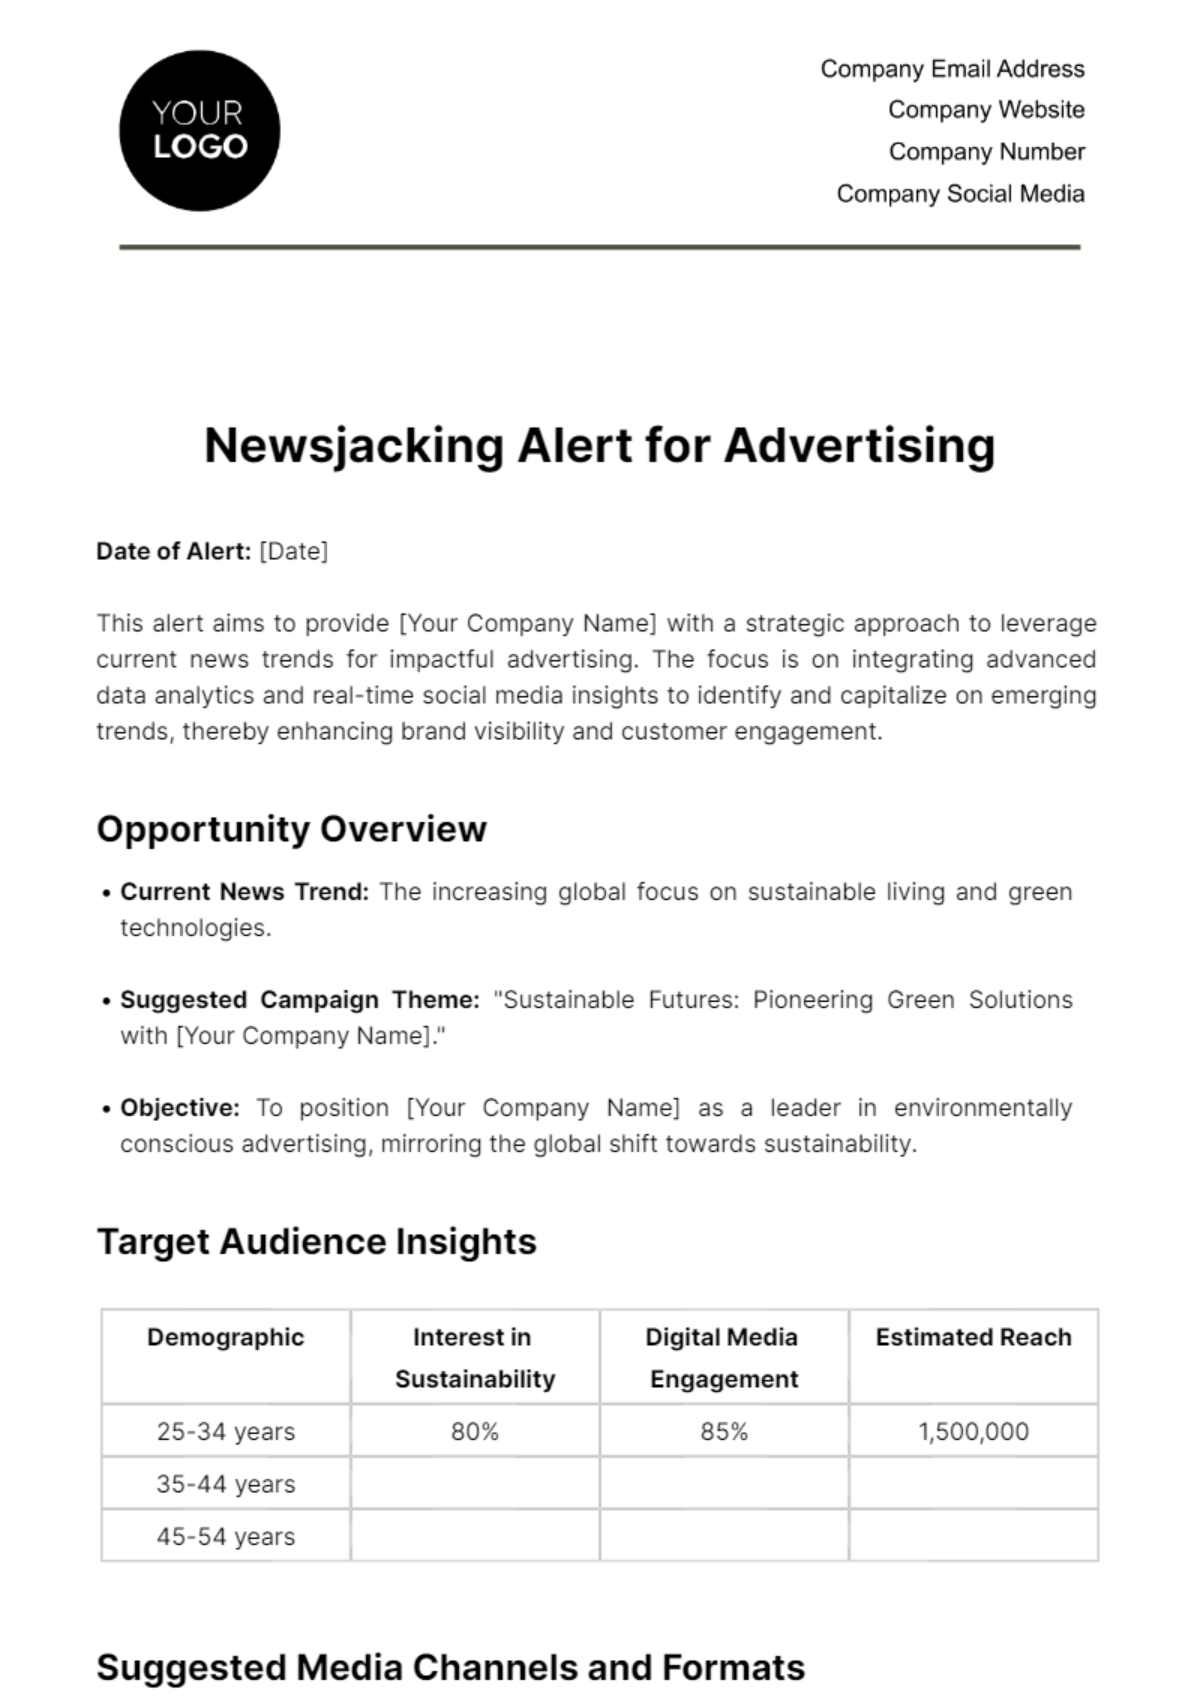 Newsjacking Alert for Advertising Template